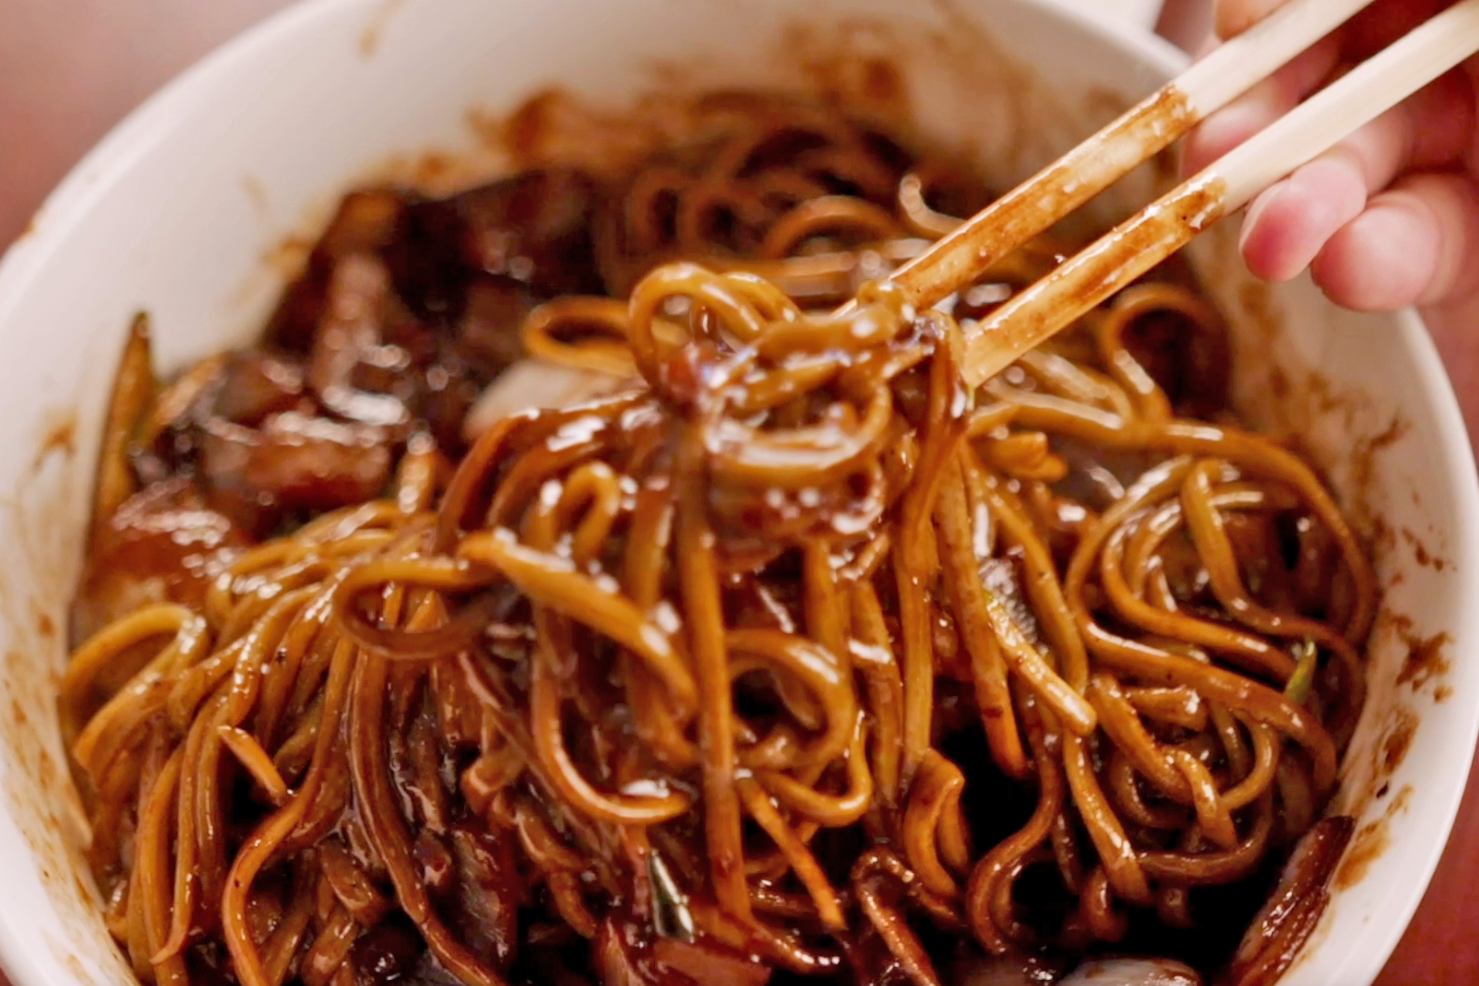 The Black Bean Noodles from Man Chun Hong.